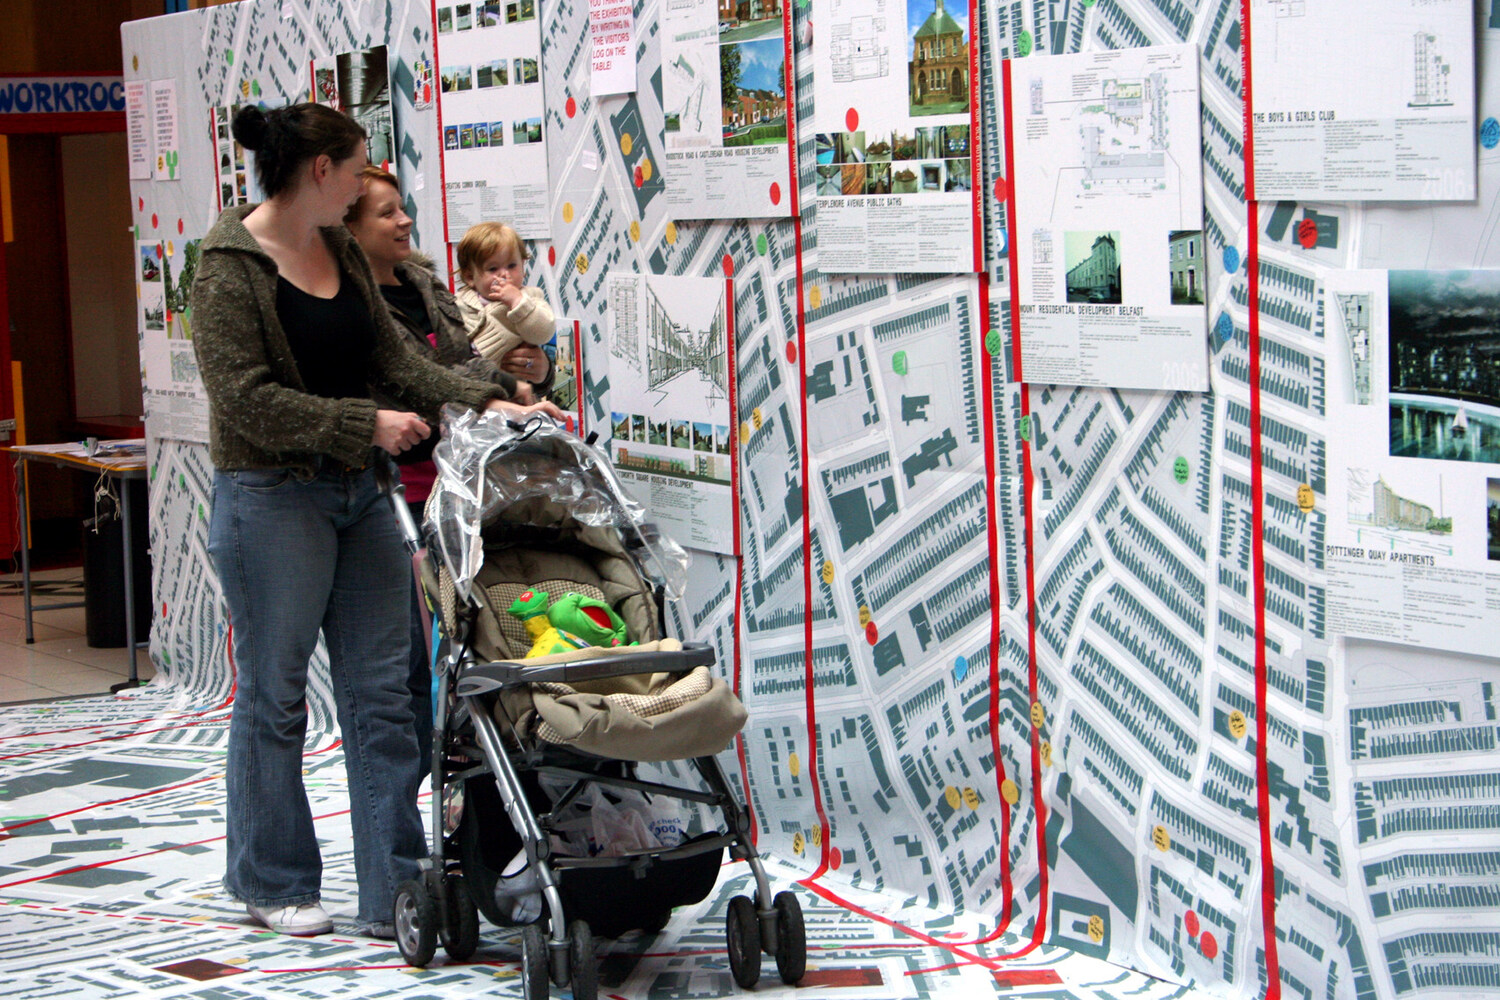 Image - Urban Regeneration Exhibition